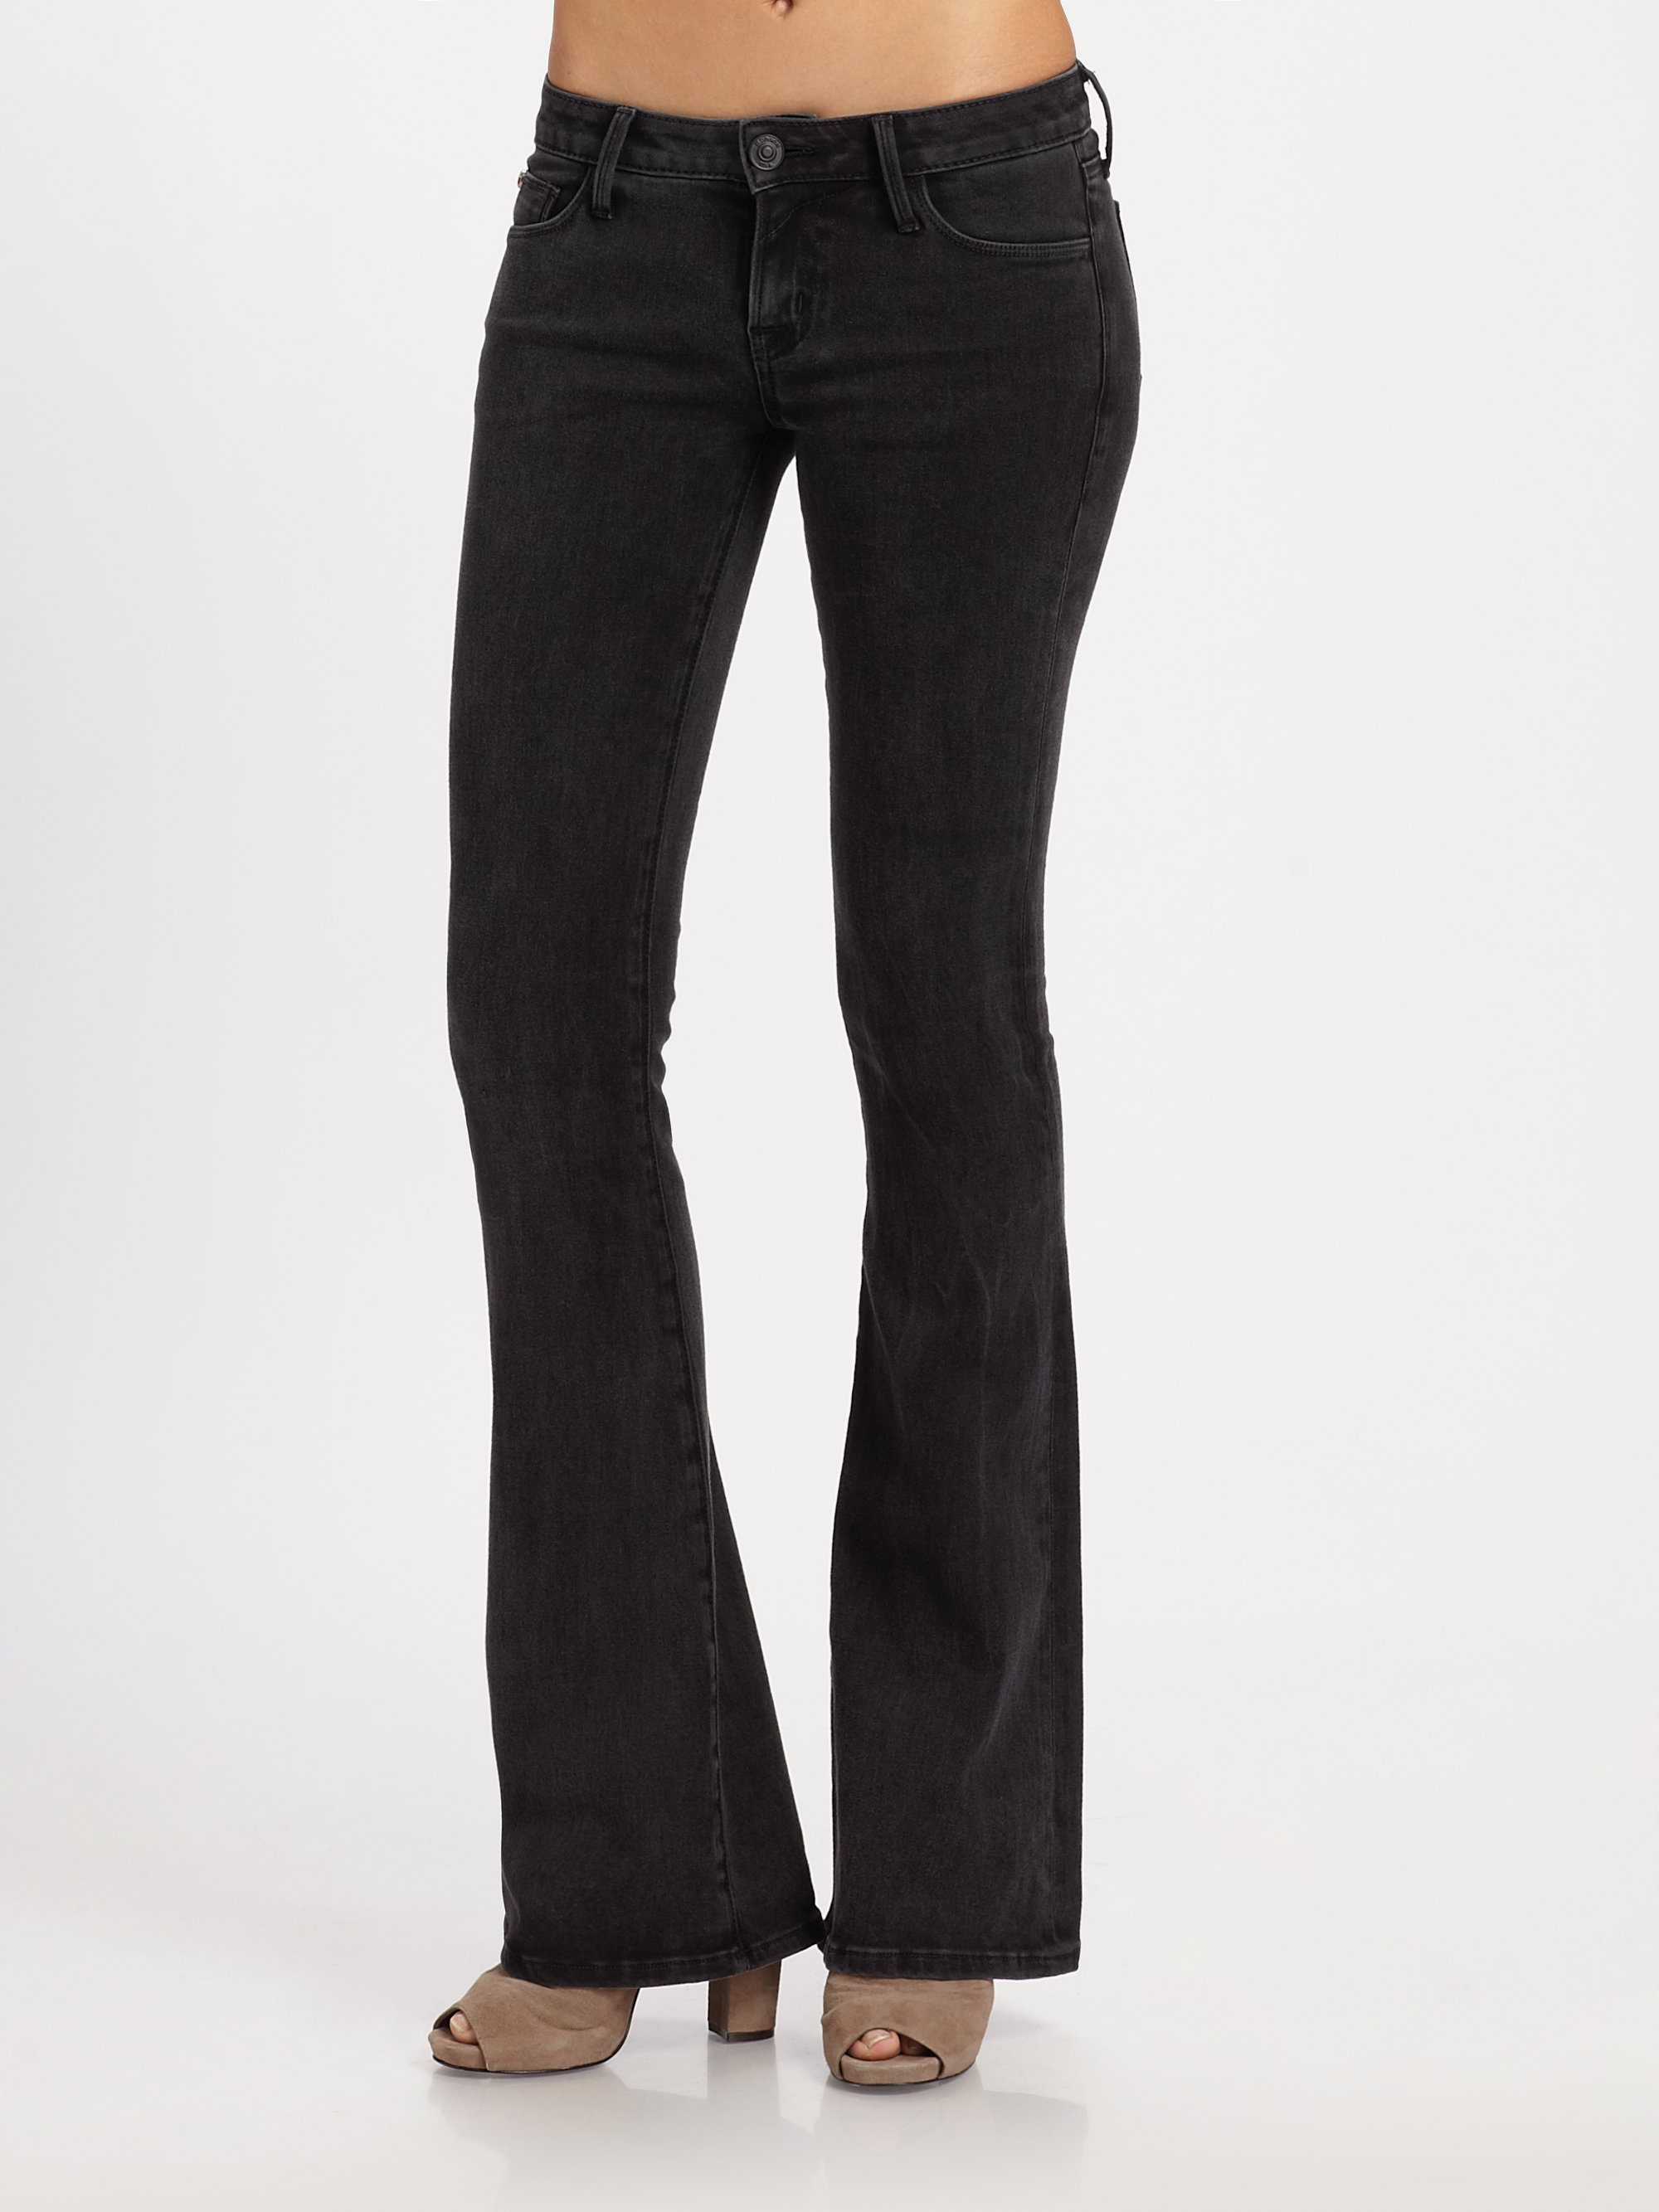 Lyst - Hudson jeans Mia Flare Jeans in Black